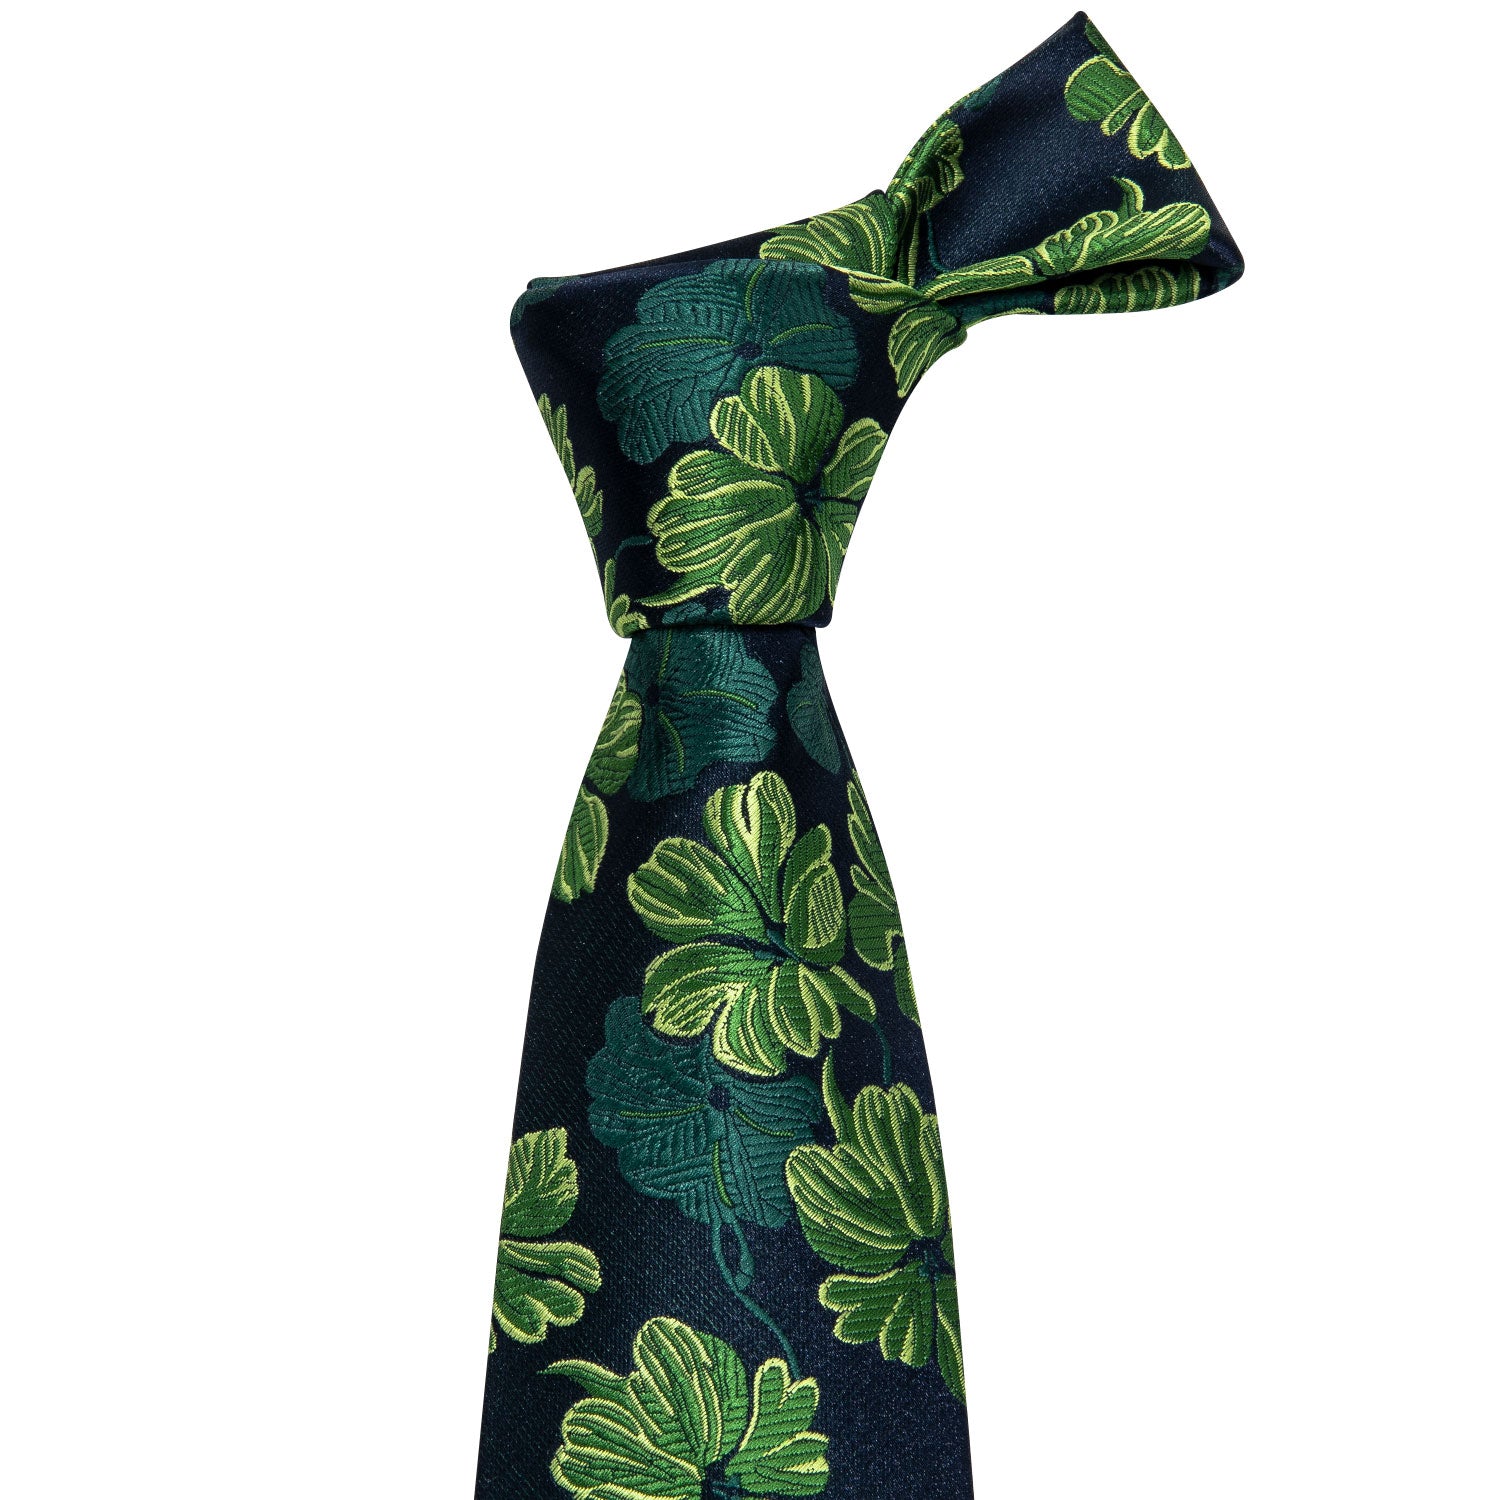 Barry Wang Green Tie Jacquard Floral Silk Tie Handkerchief Cufflinks Set for Men